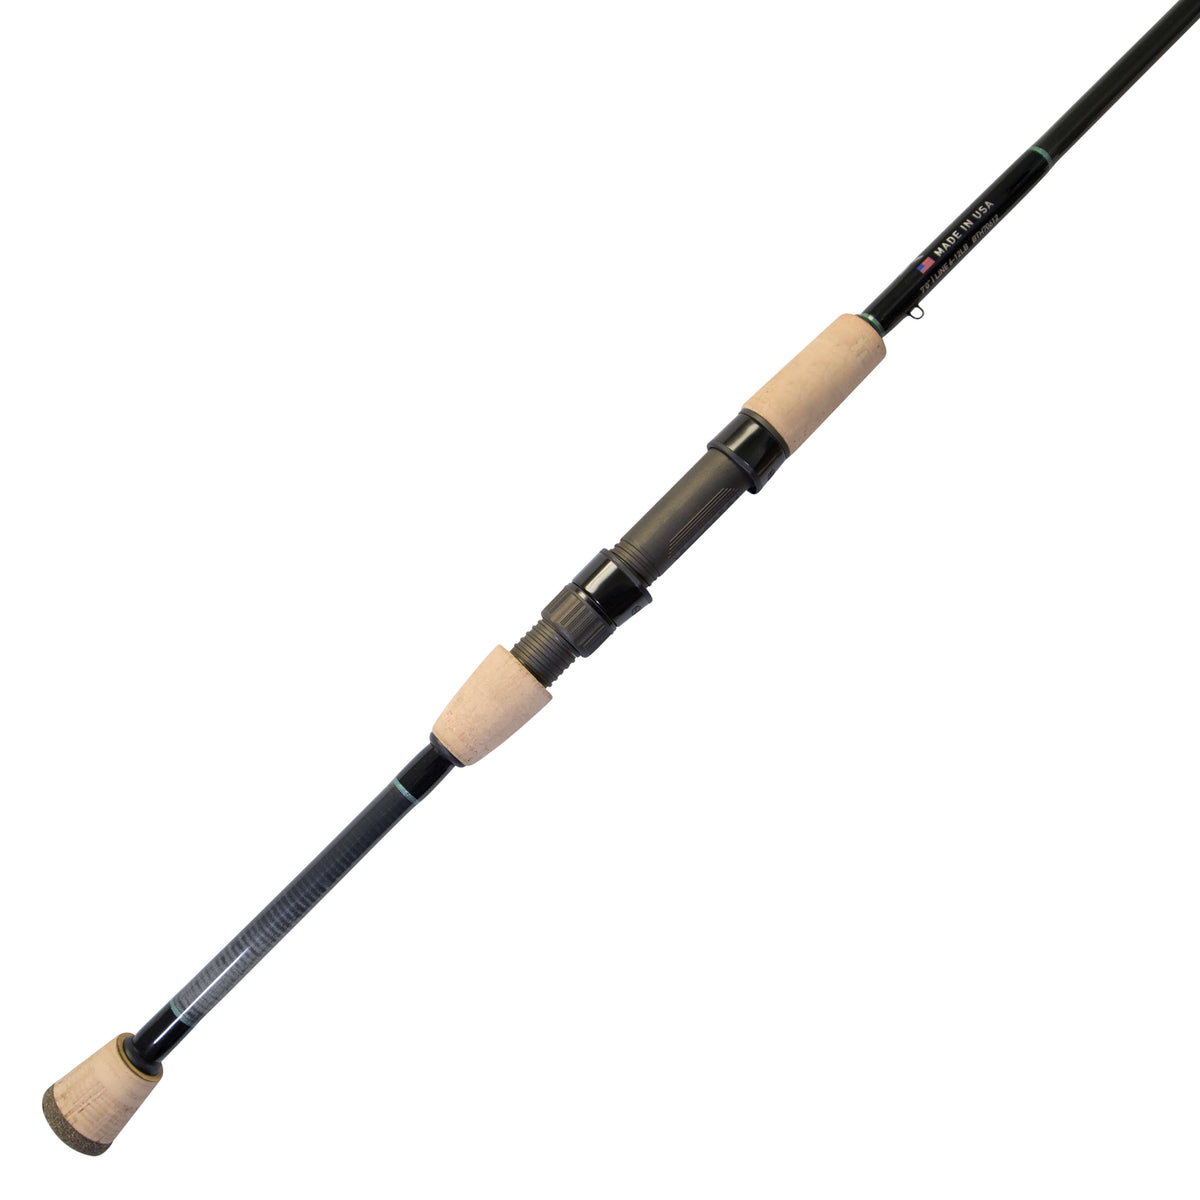  Sosoport 2pcs Fishing Lures Artificial Bait Rod